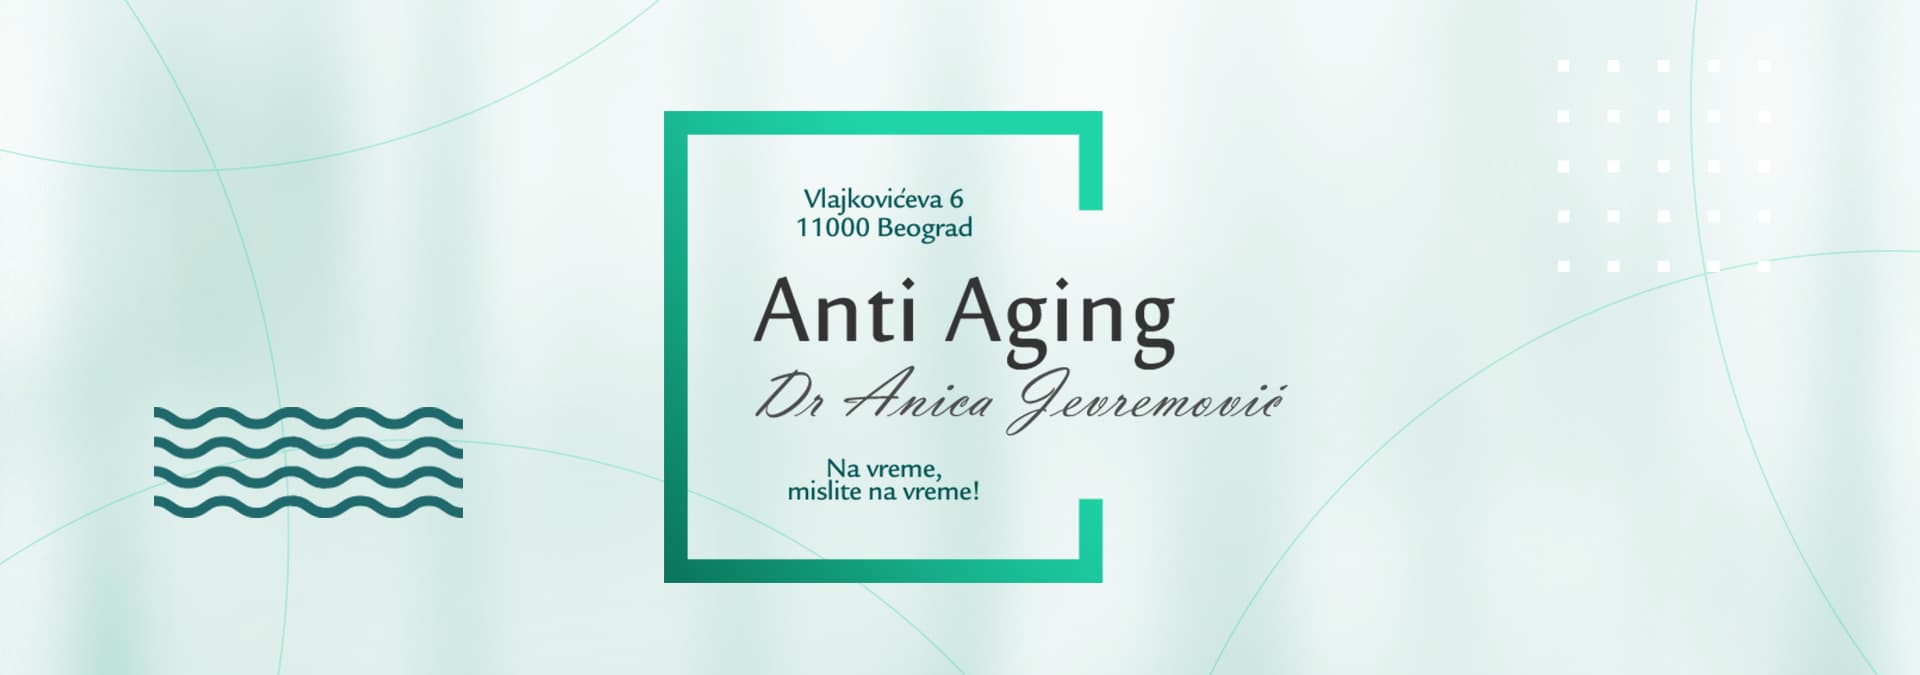 anti aging baner desktop 1